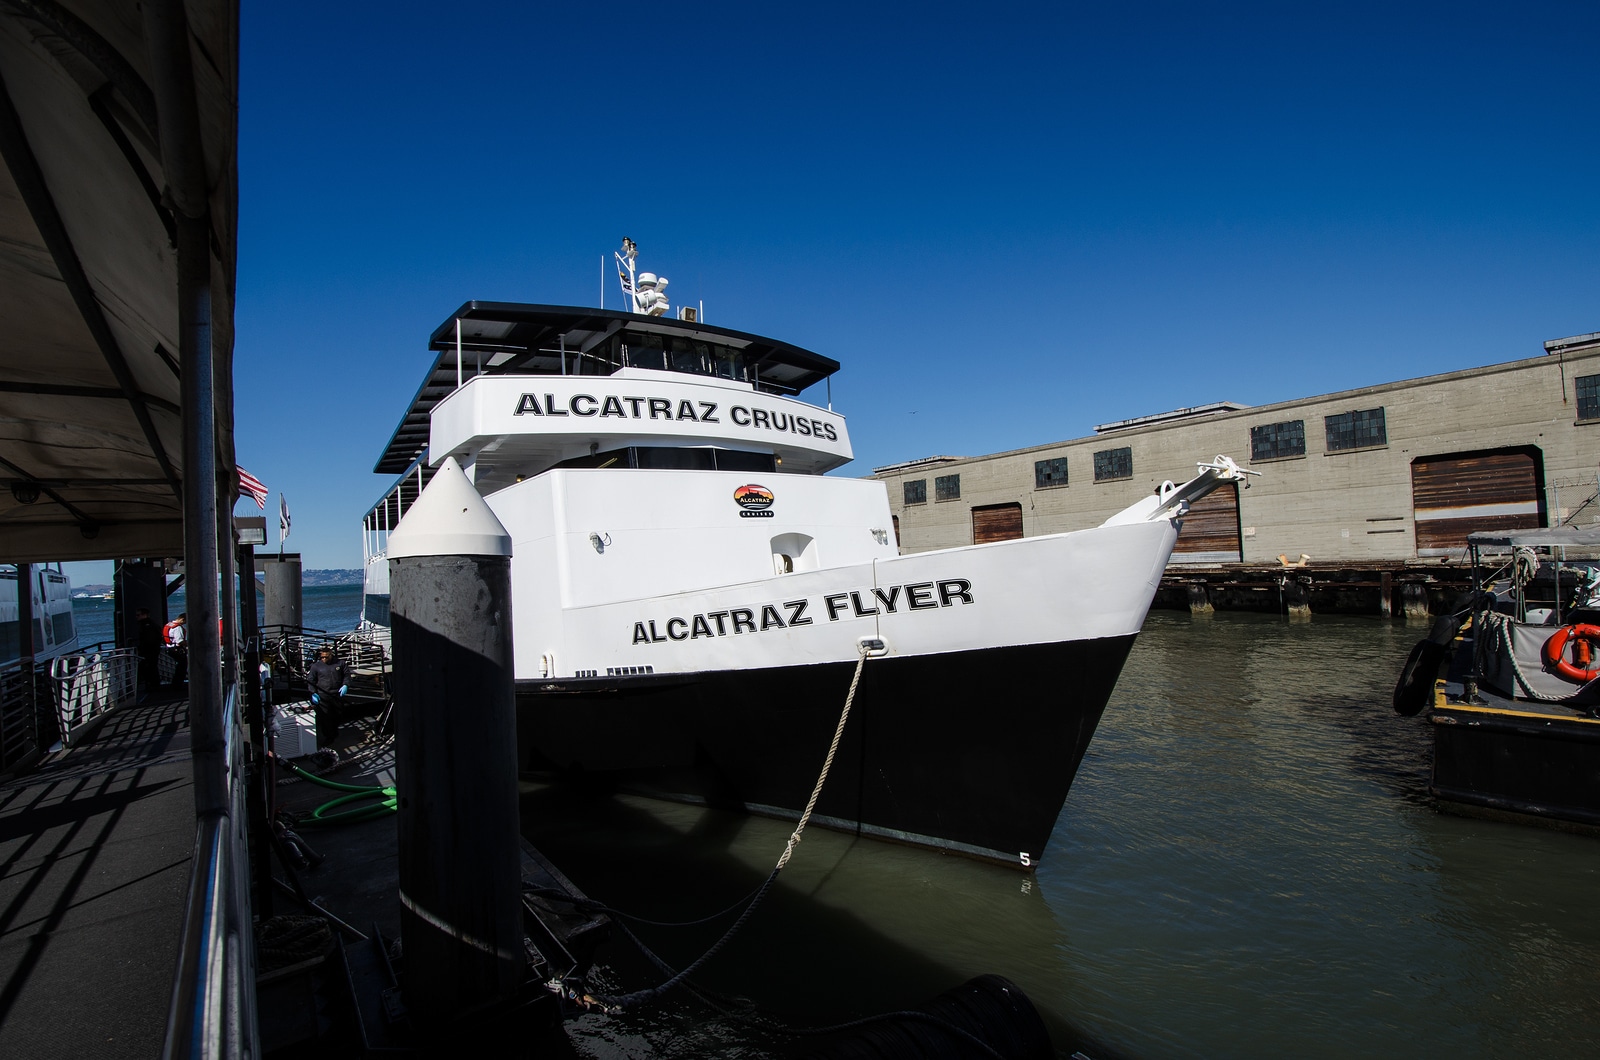 The Alcatraz Cruises boat by Tripps Plus Las Vegas